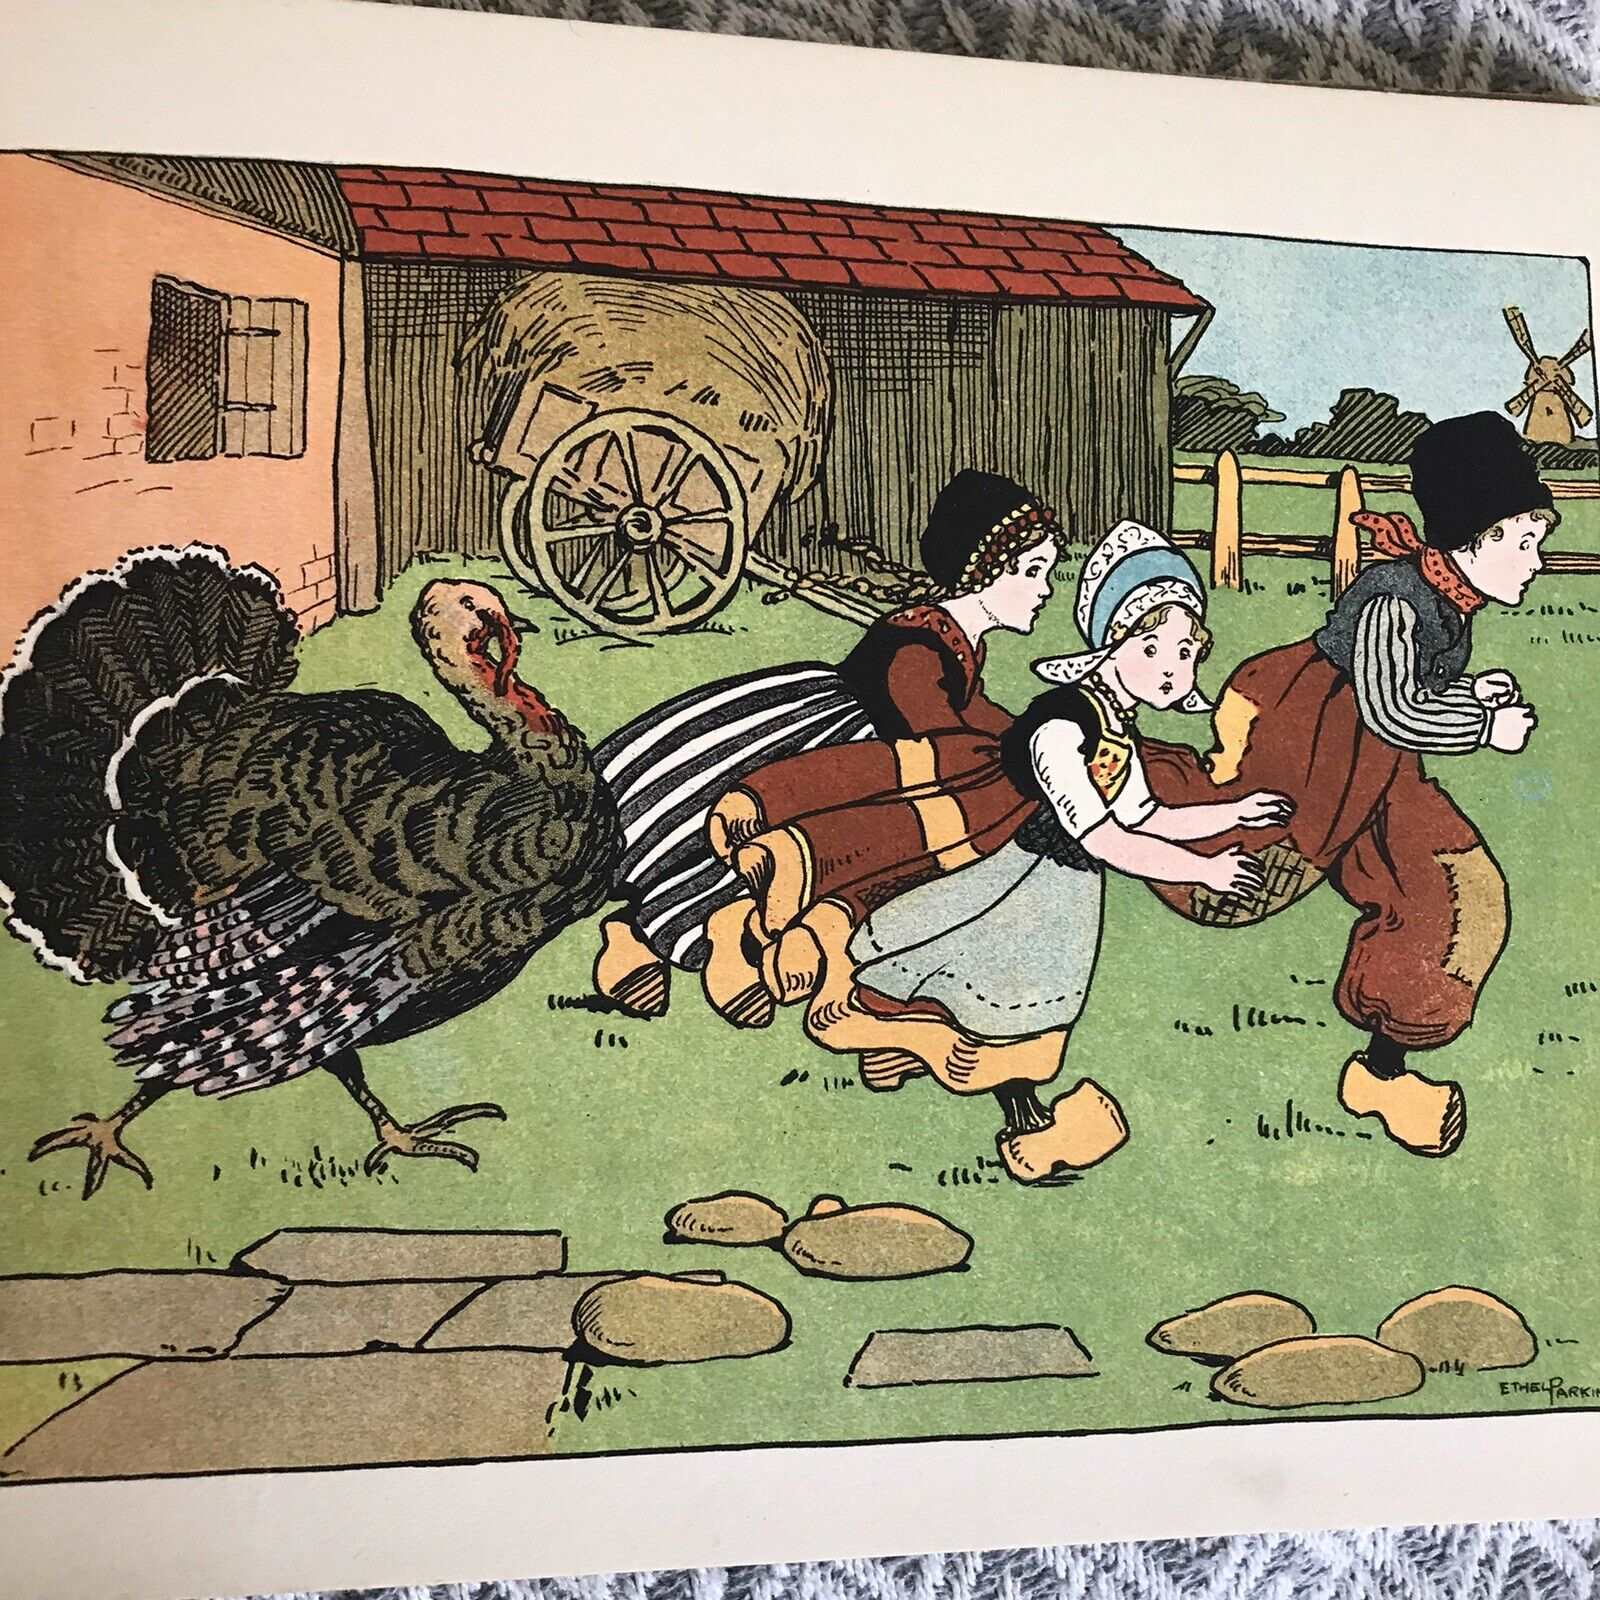 1909 Dutchie Doings - Walter Chapman (Ethel Parkinson Illust) Blackie & Son Honeyburn Books (UK)